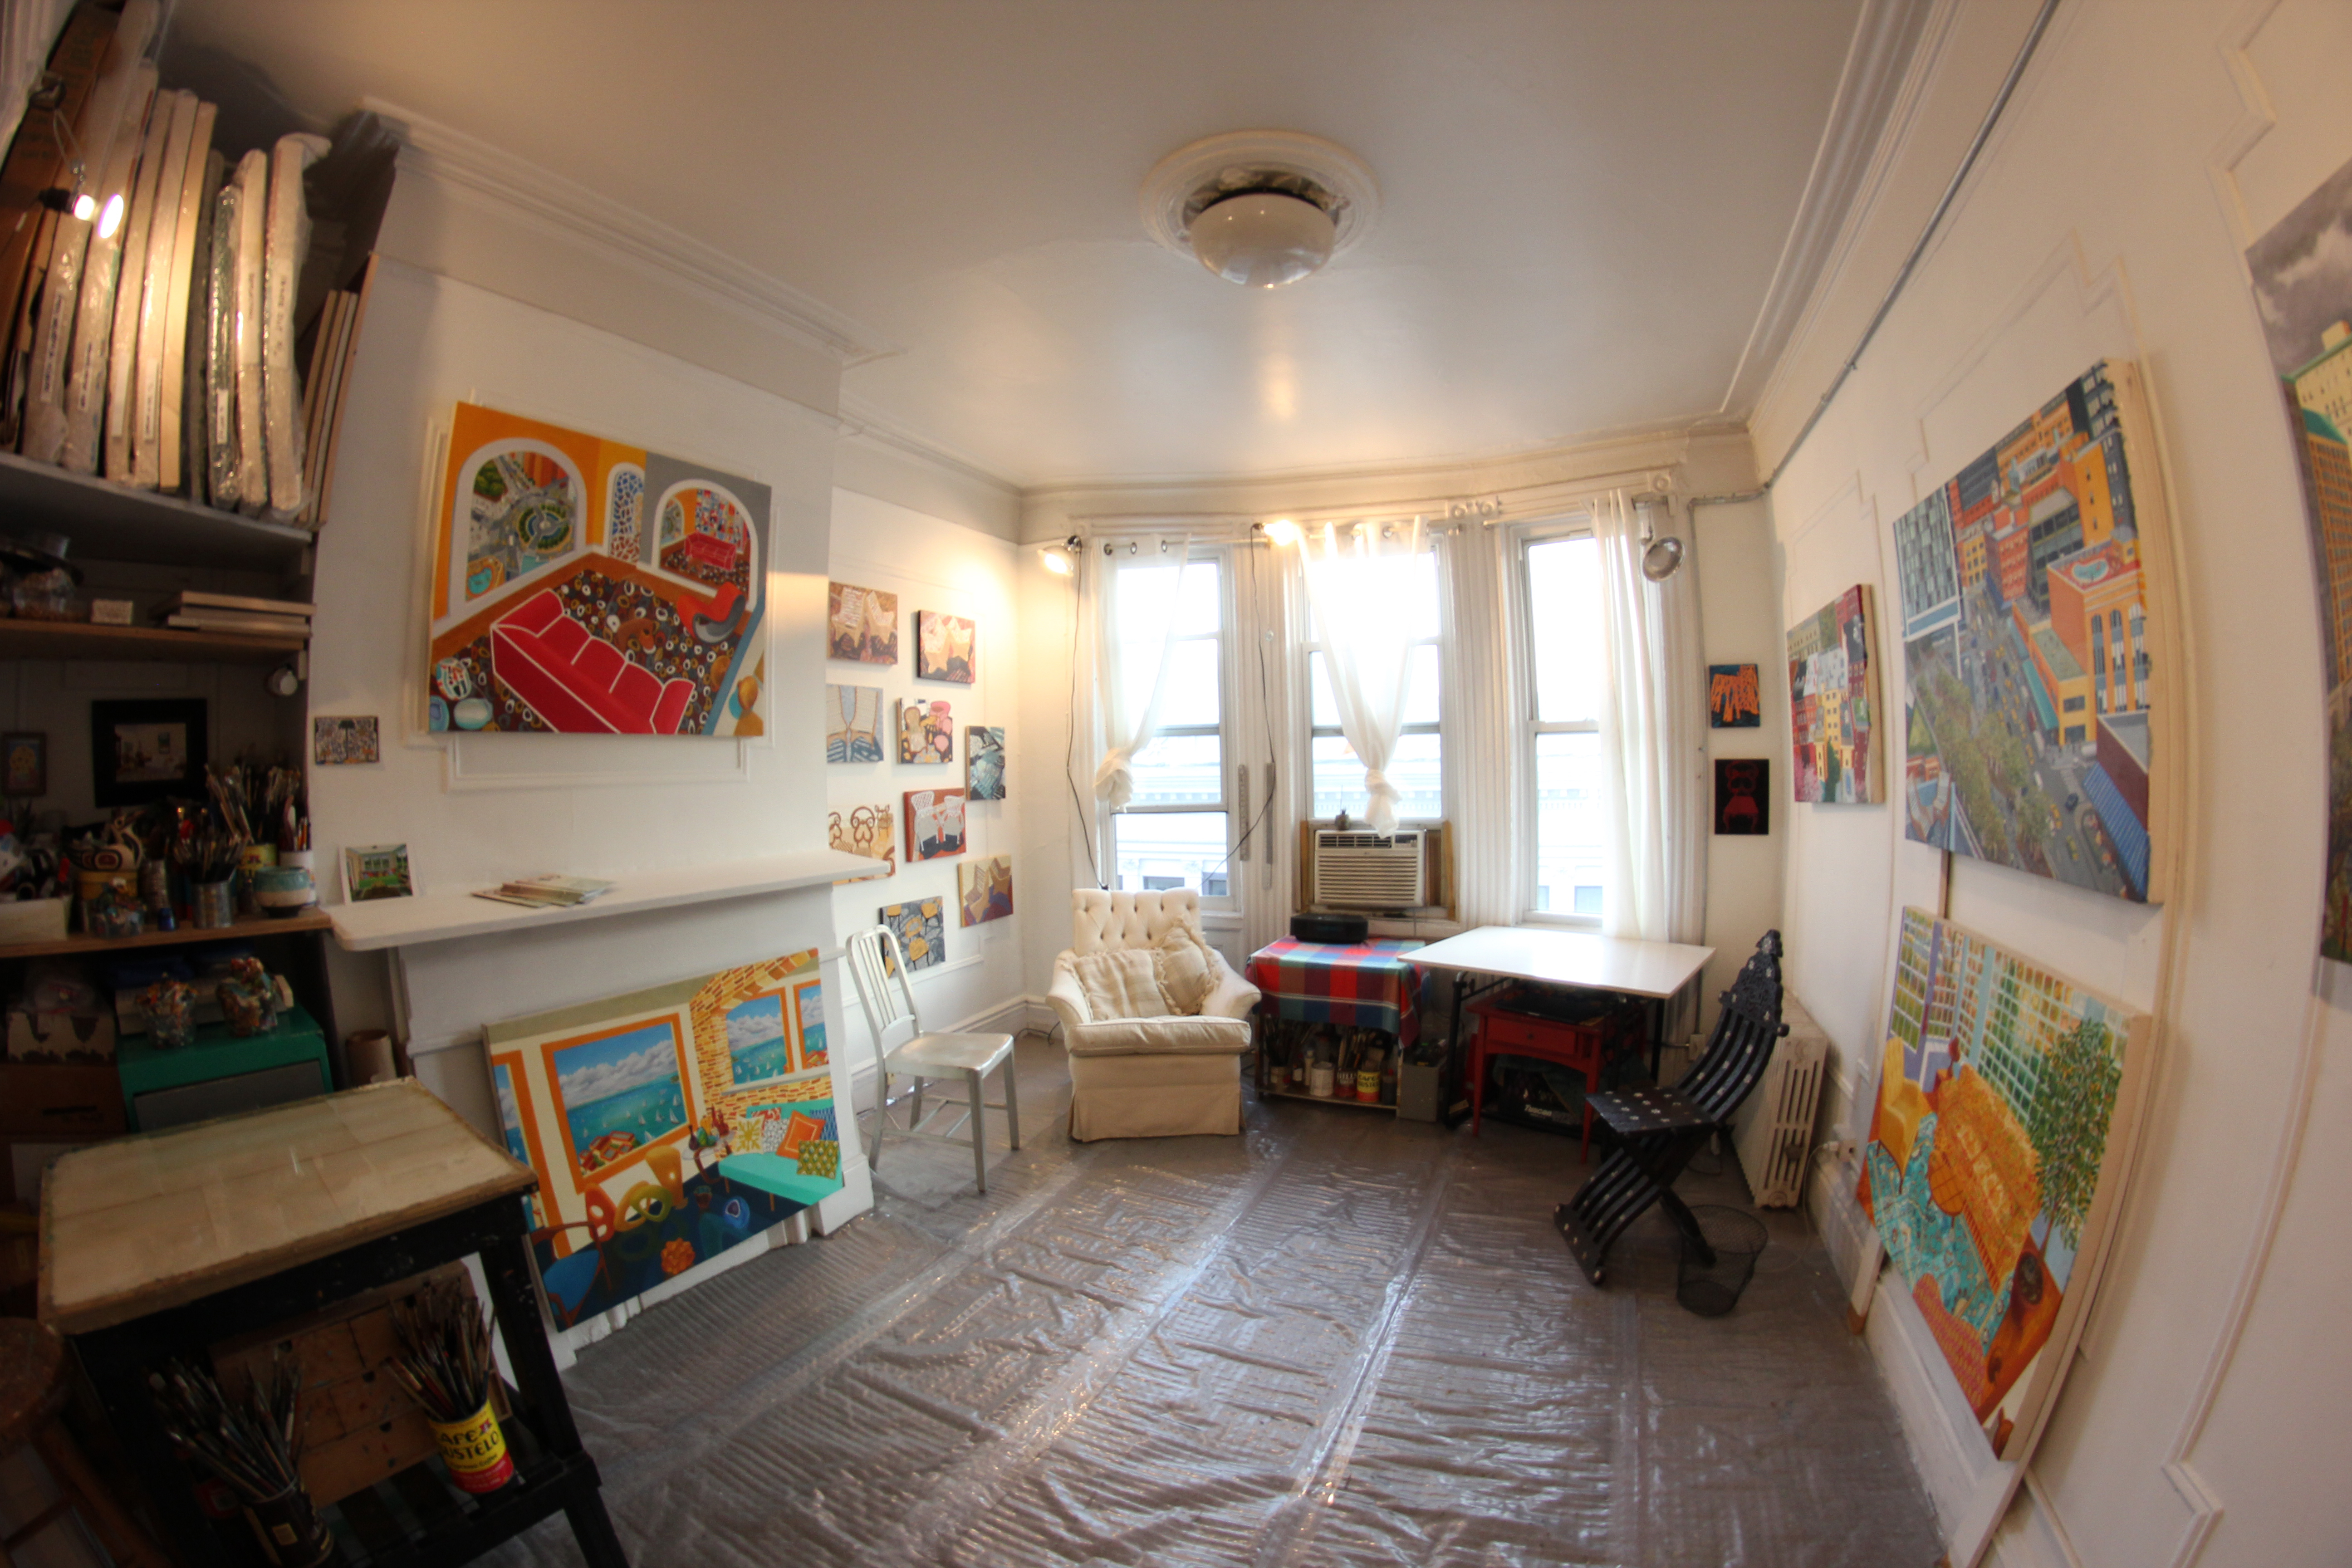 Roxa Smith's studio. Image courtesy of the artist.